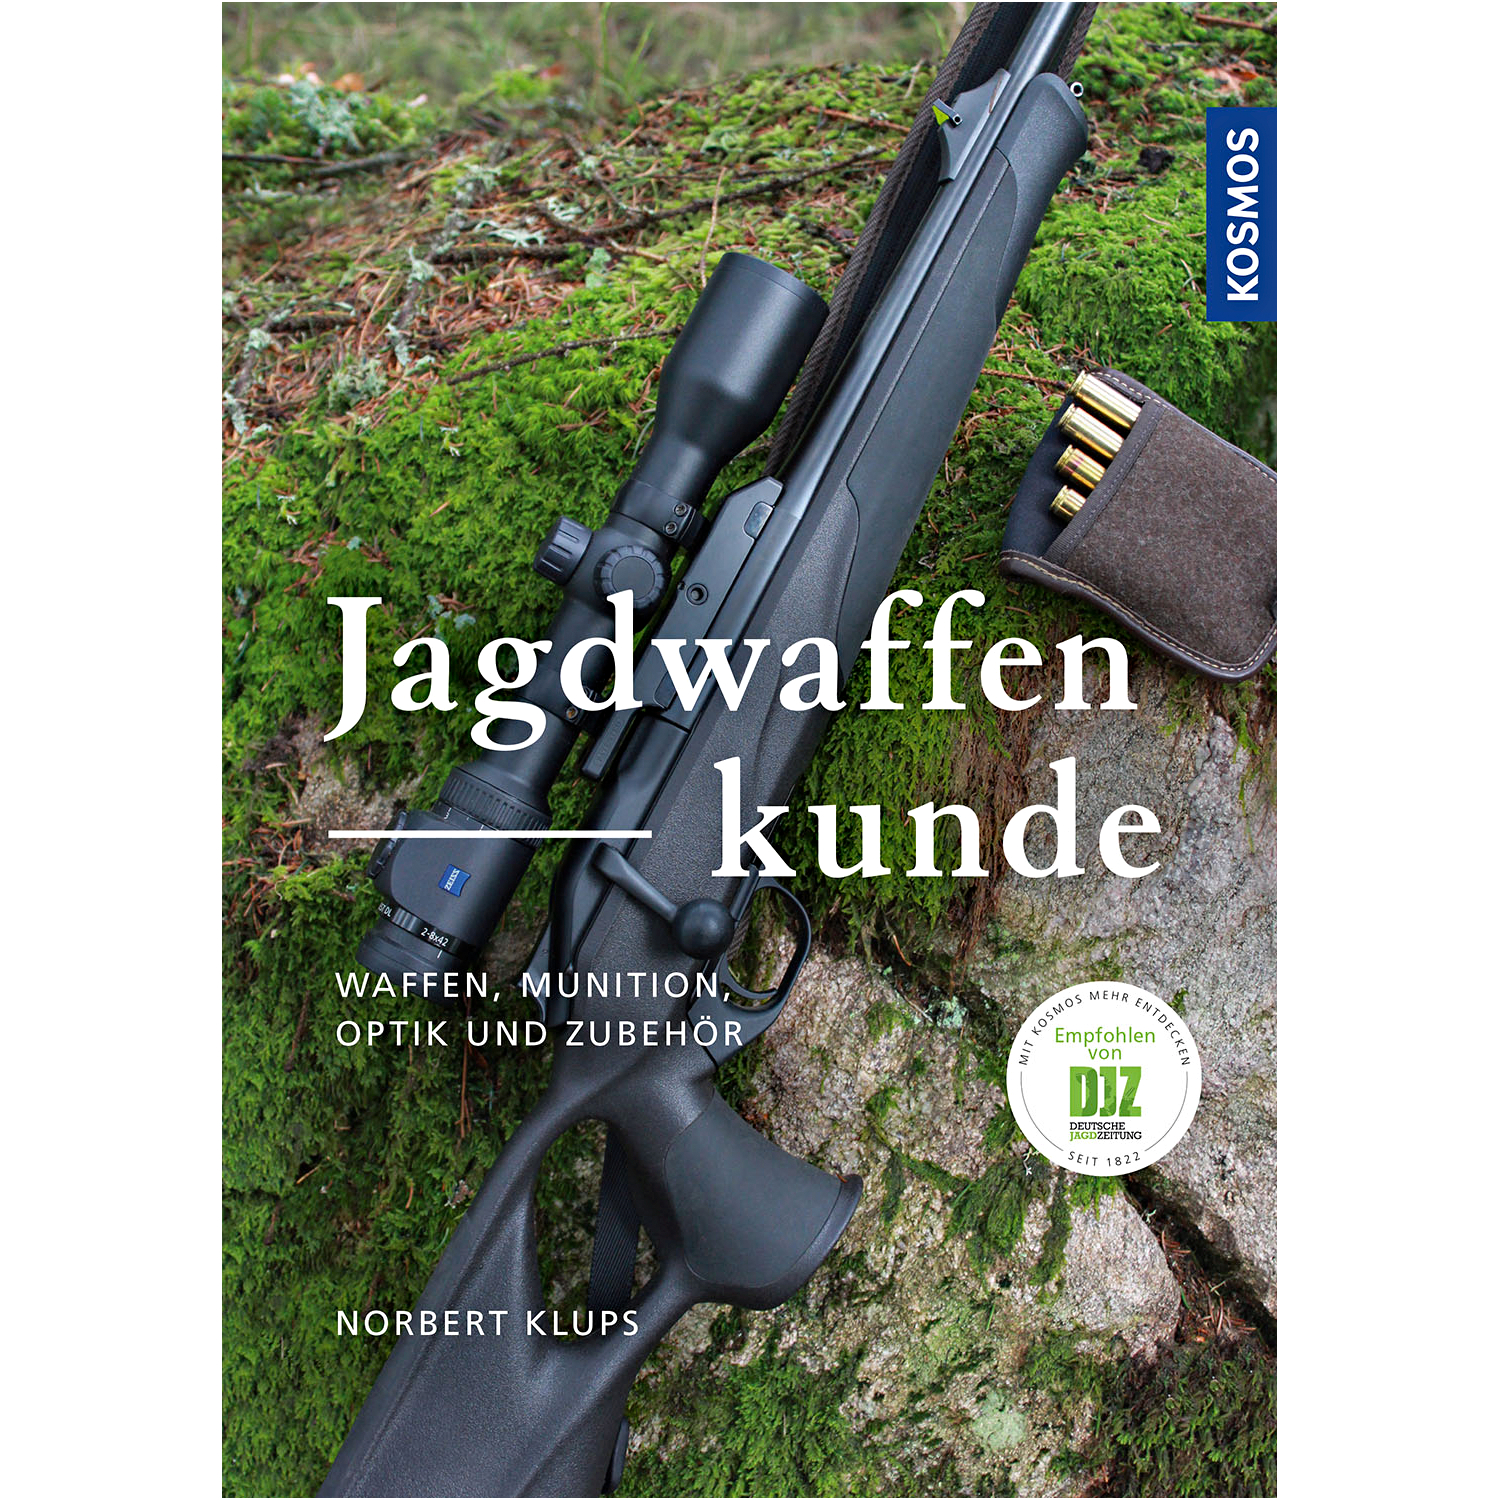 Book: Jagdwaffenkunde by Norbert Klups (German version) 